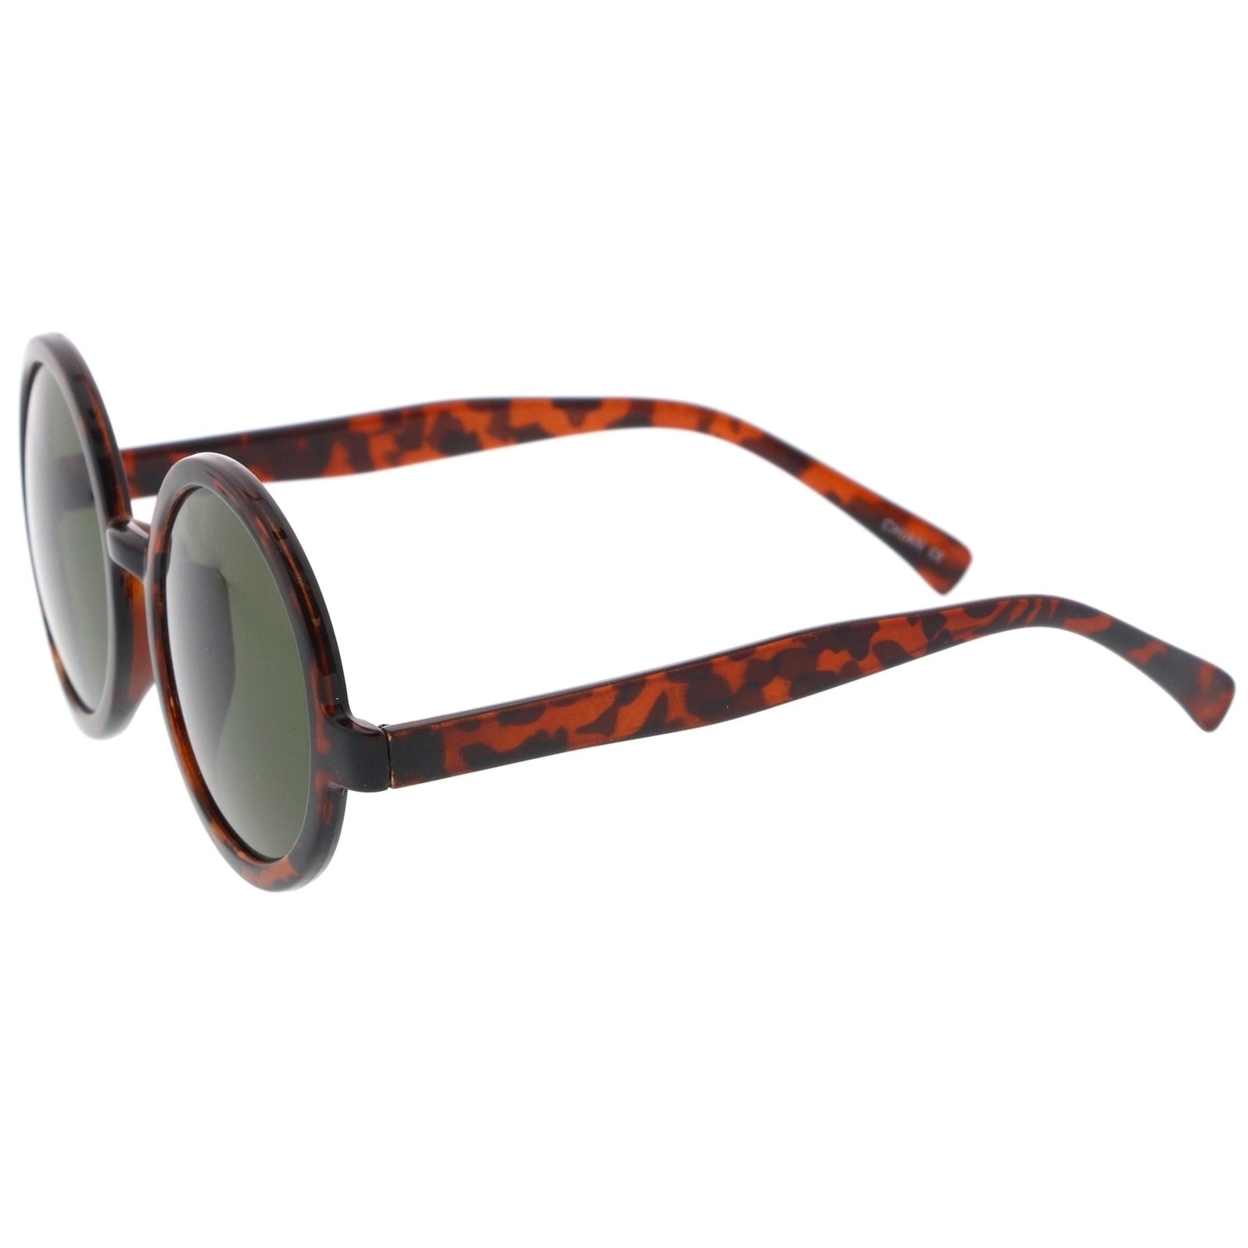 Classic Retro Horn Rimmed Neutral-Colored Lens Round Sunglasses 52mm - Black / Smoke Gradient